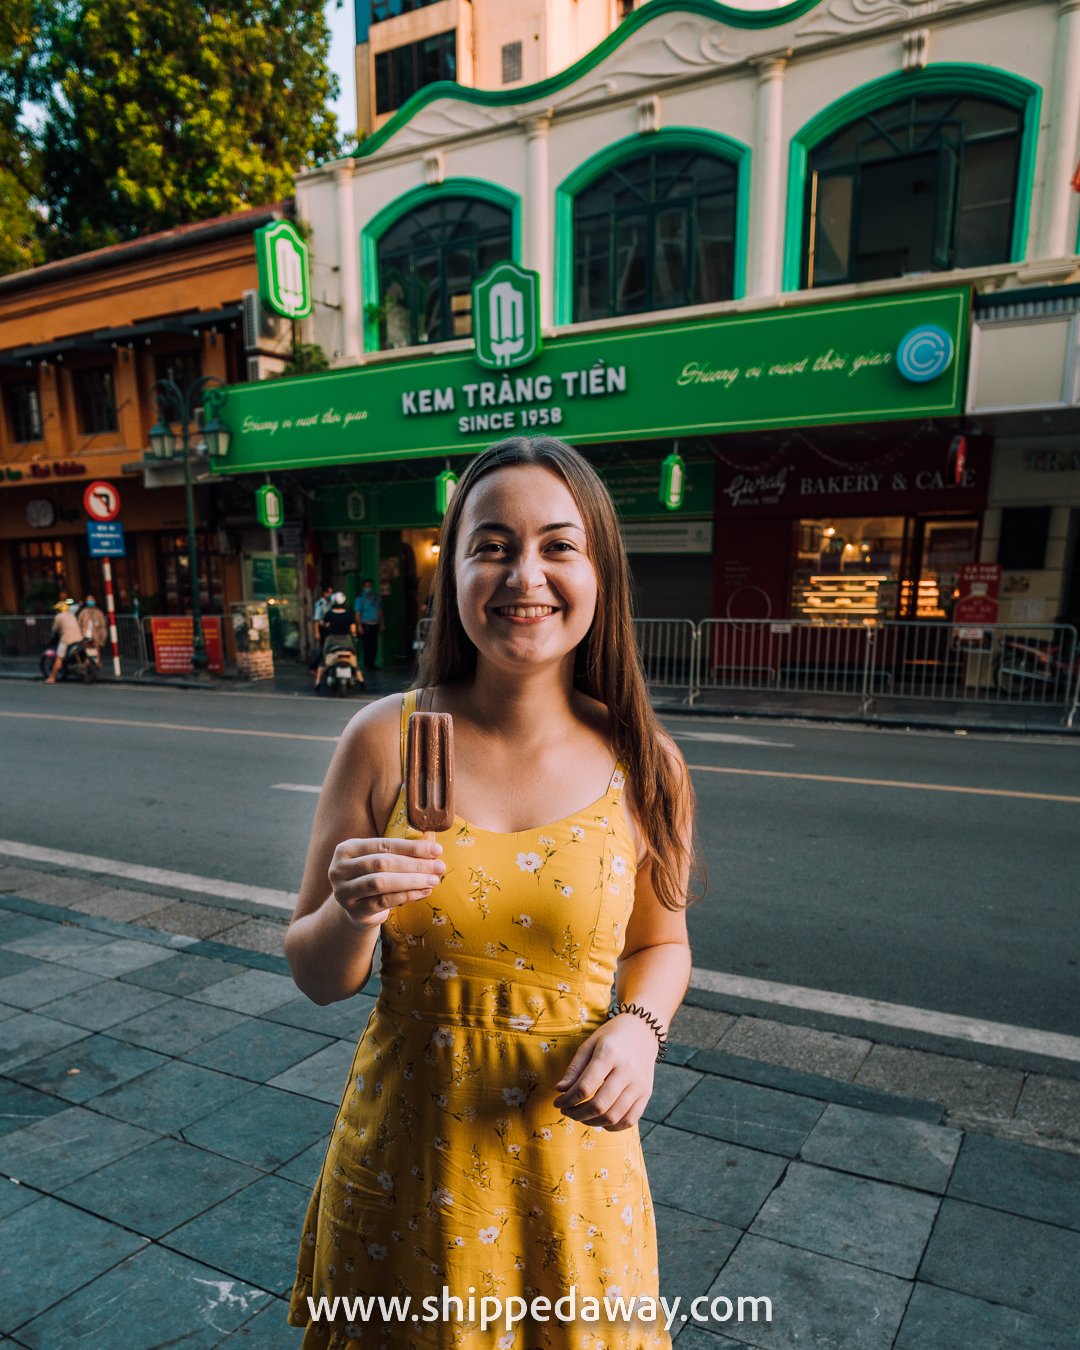 Arijana Tkalcec with a ice cream stick from Kem Trang Tien, most famous ice cream shop in Hanoi, Vietnam